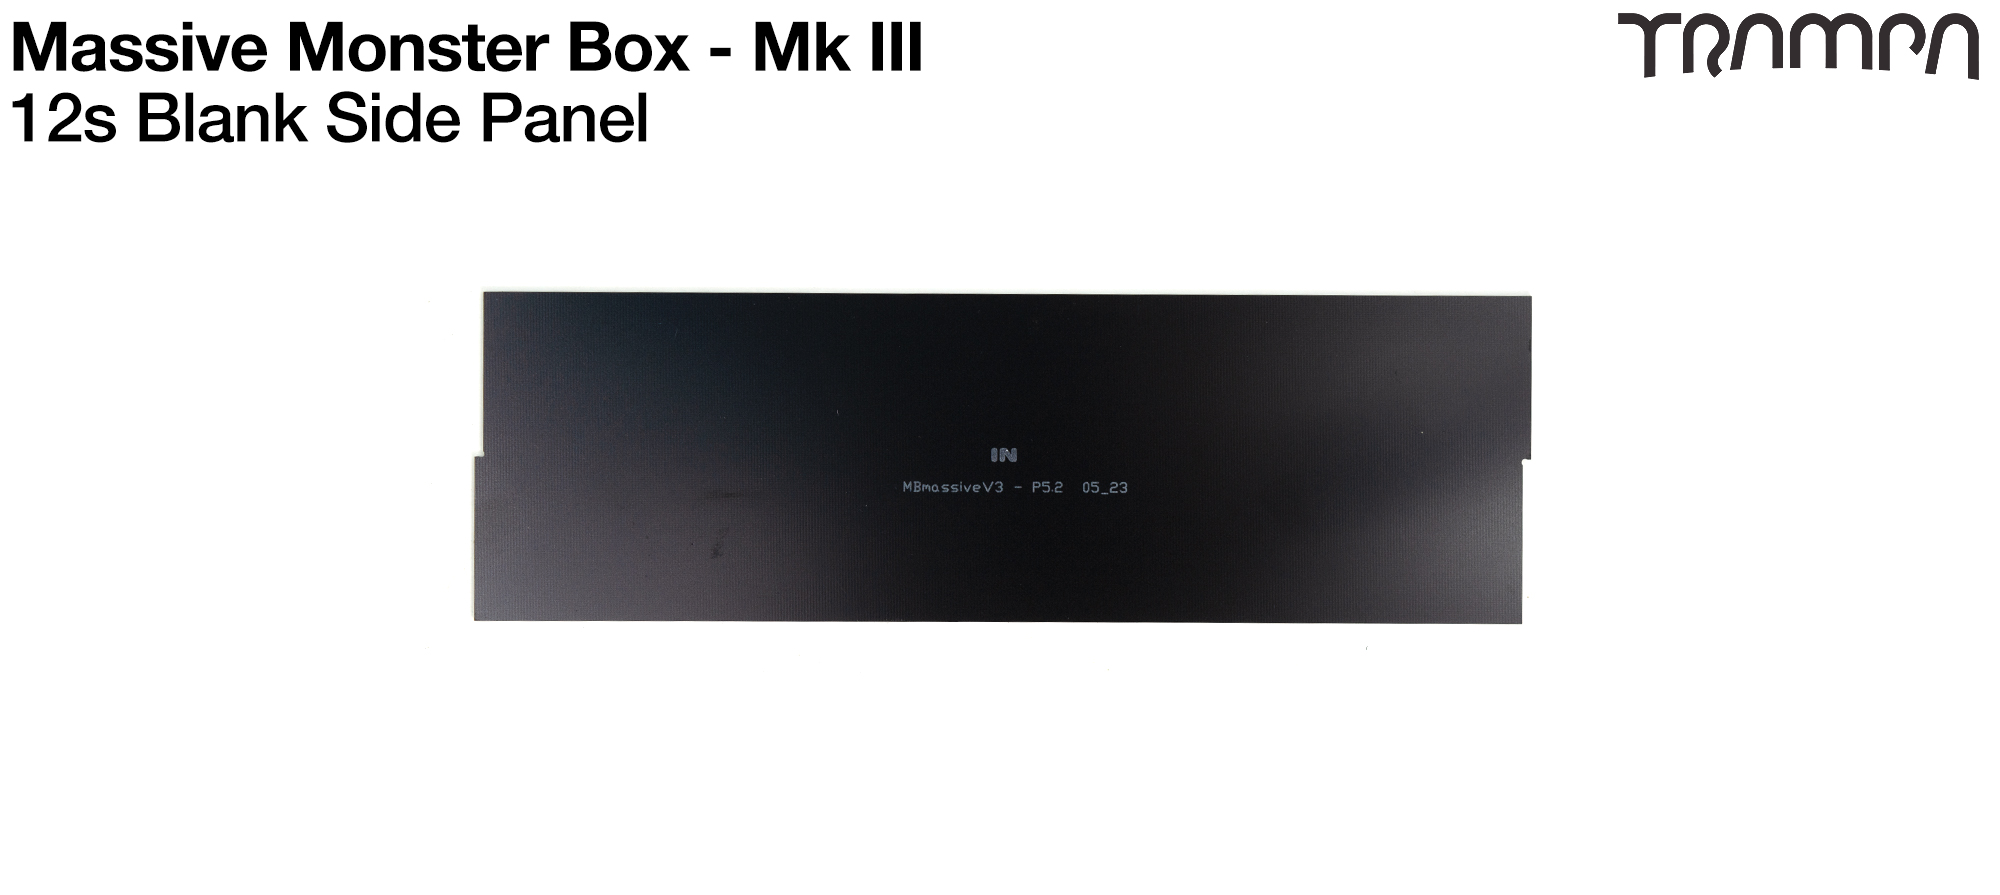 Mk III Massive Monster Box 12s - SIDE PANEL BLANK